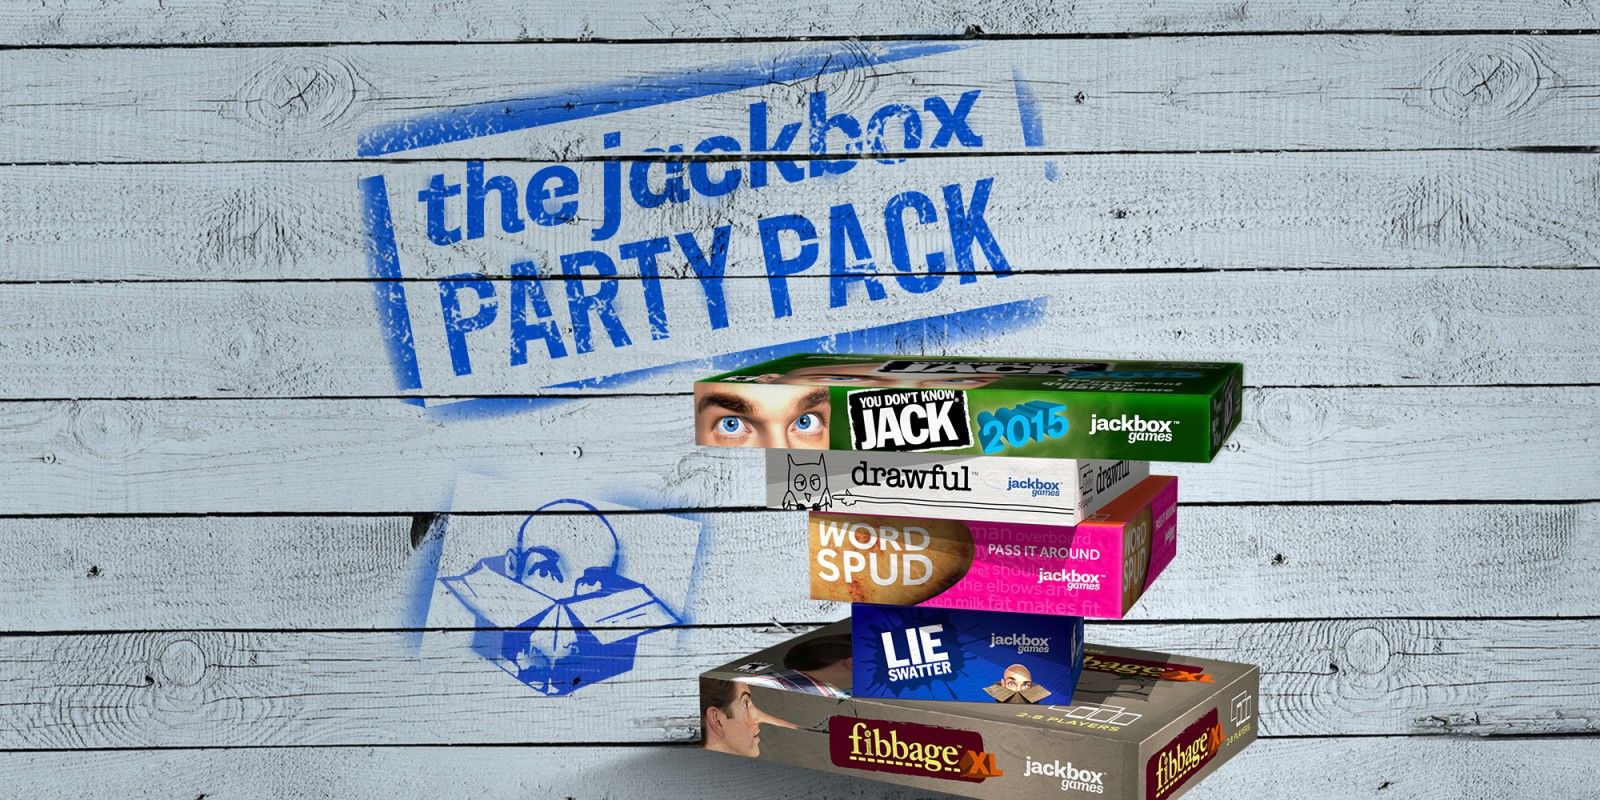 The original Jackbox Party Pack 1